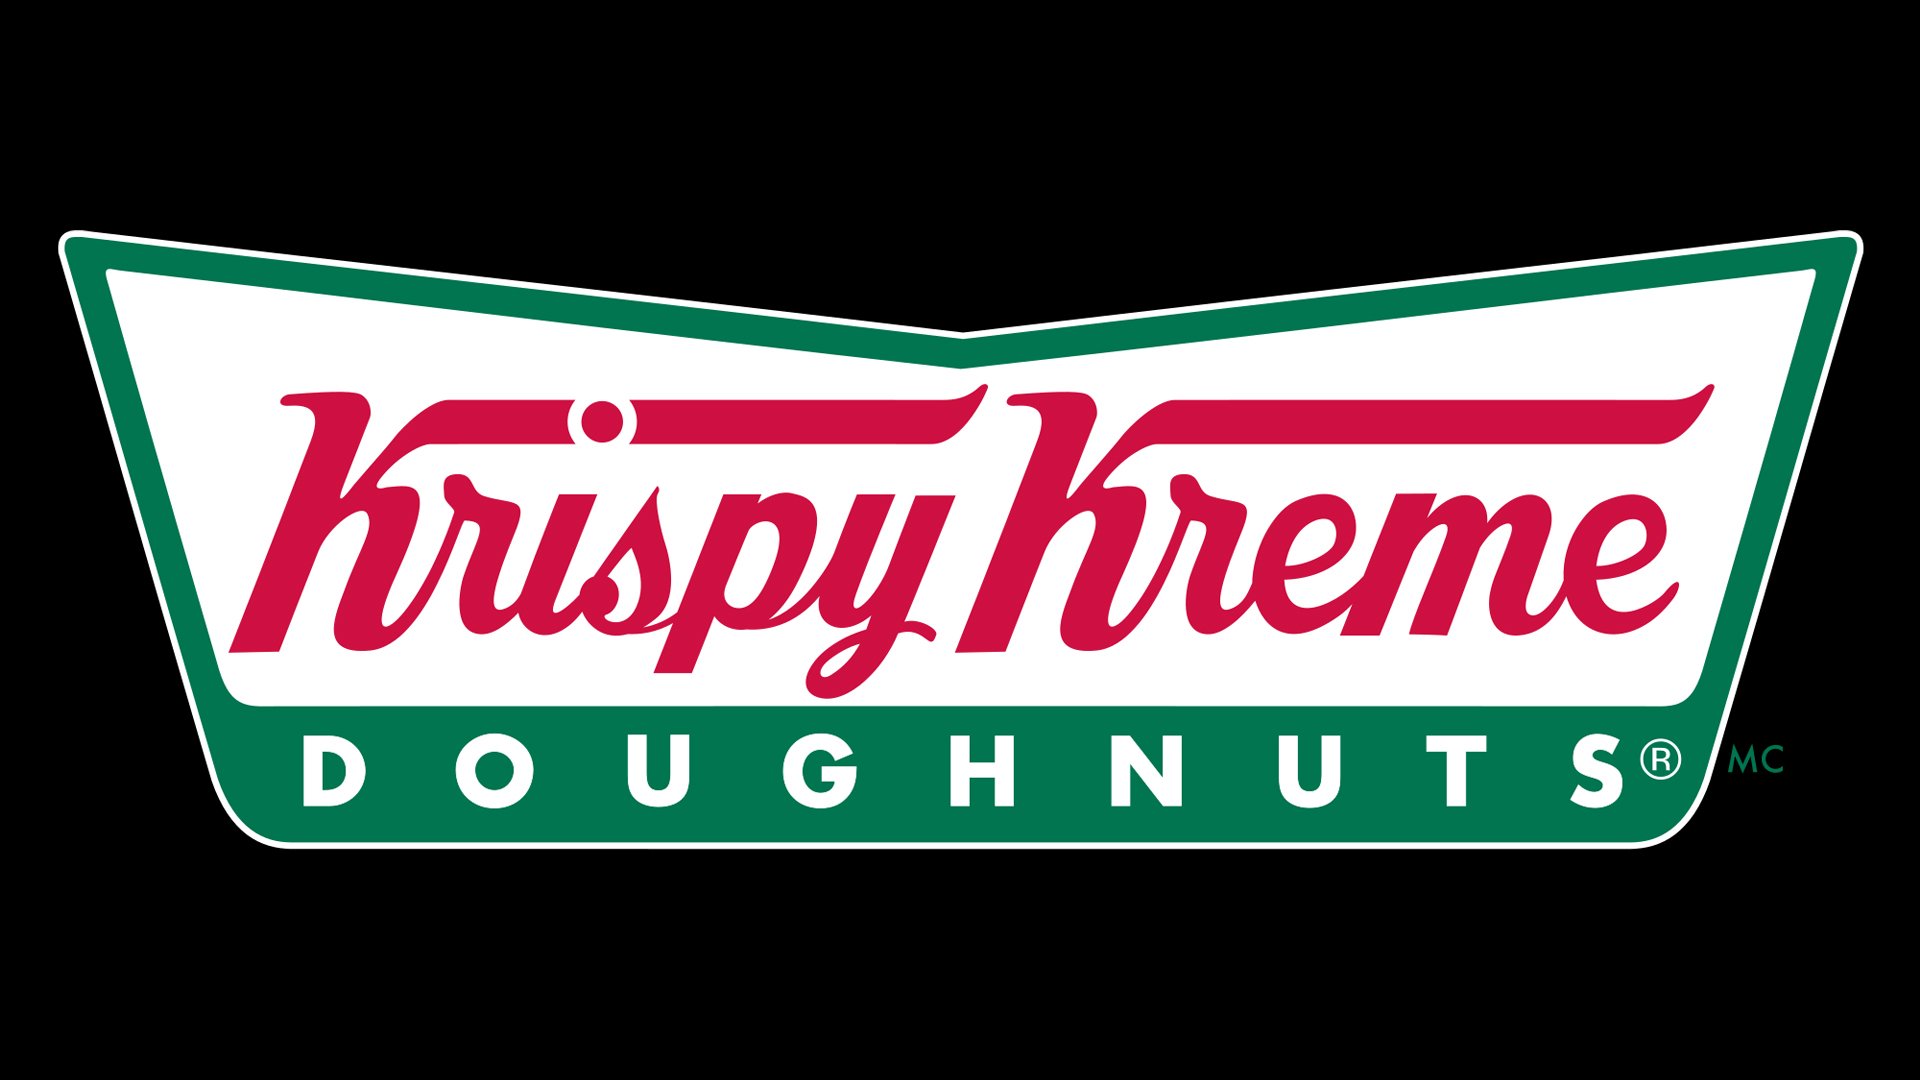 Meaning Krispy Kreme logo and symbol history and evolution